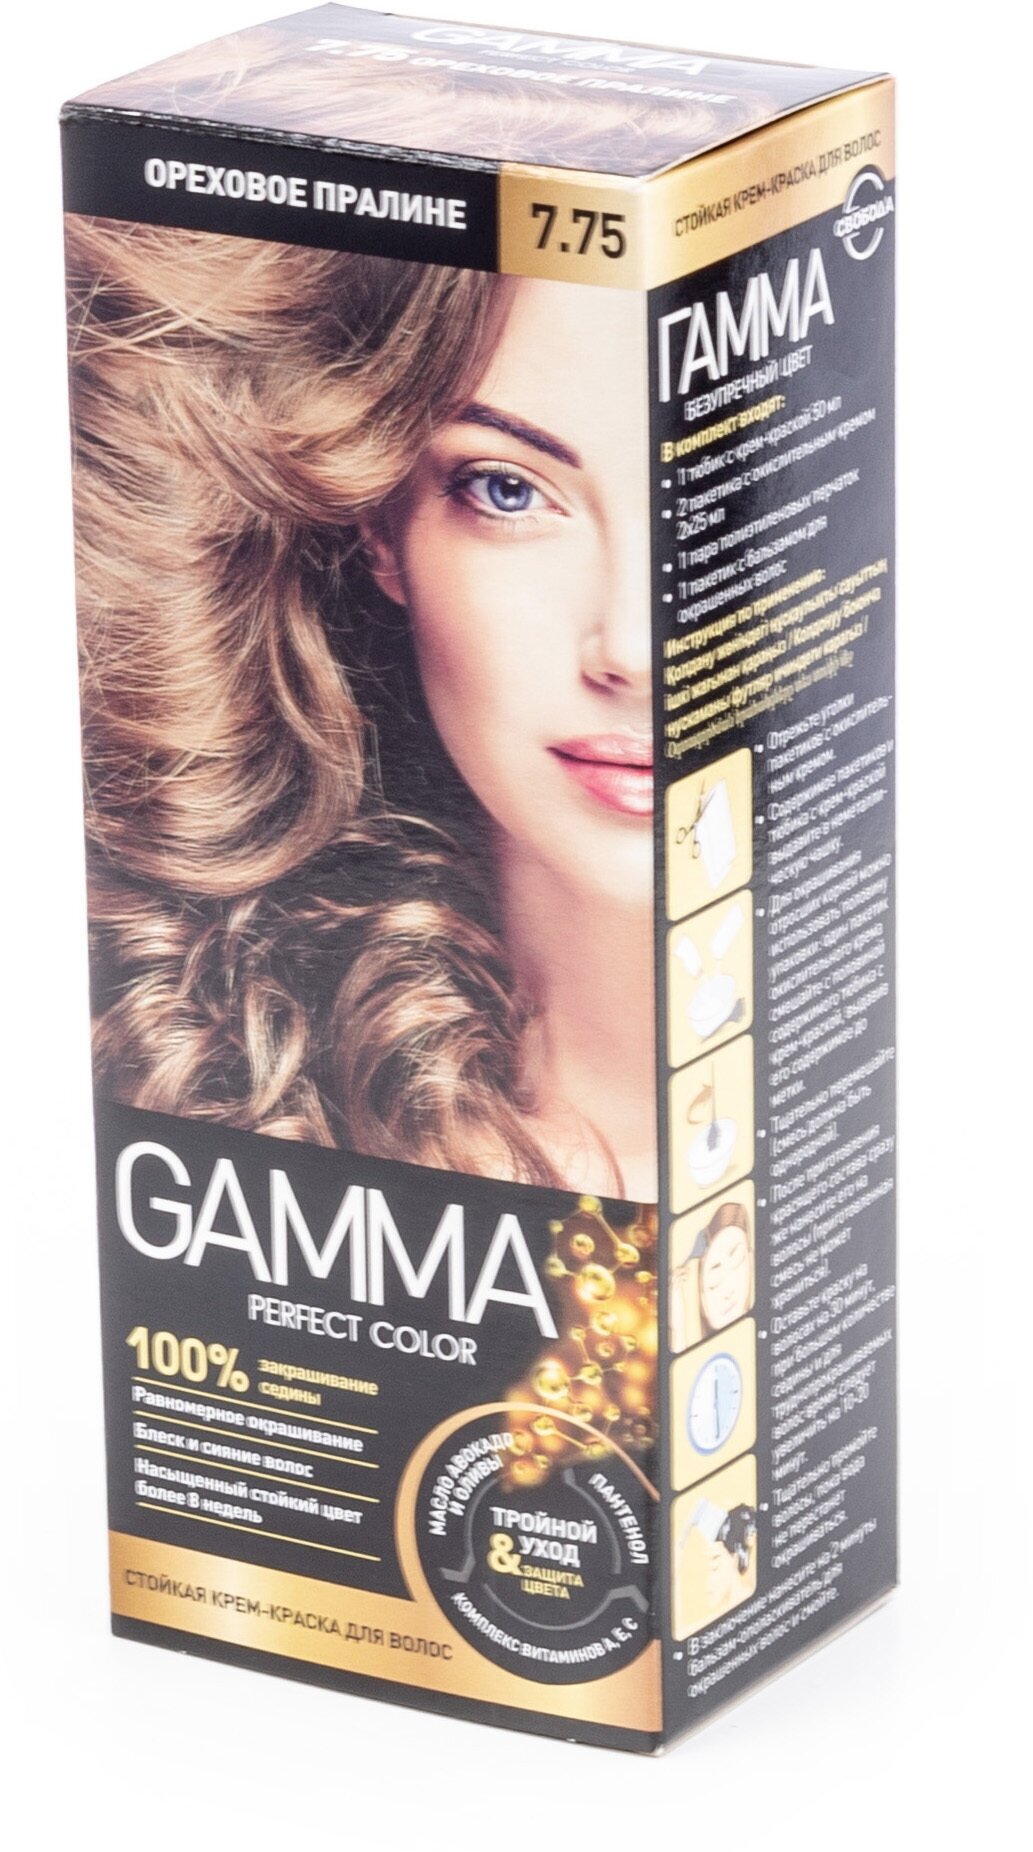 GAMMA Perfect Color краска для волос, 7.75 ореховое пралине